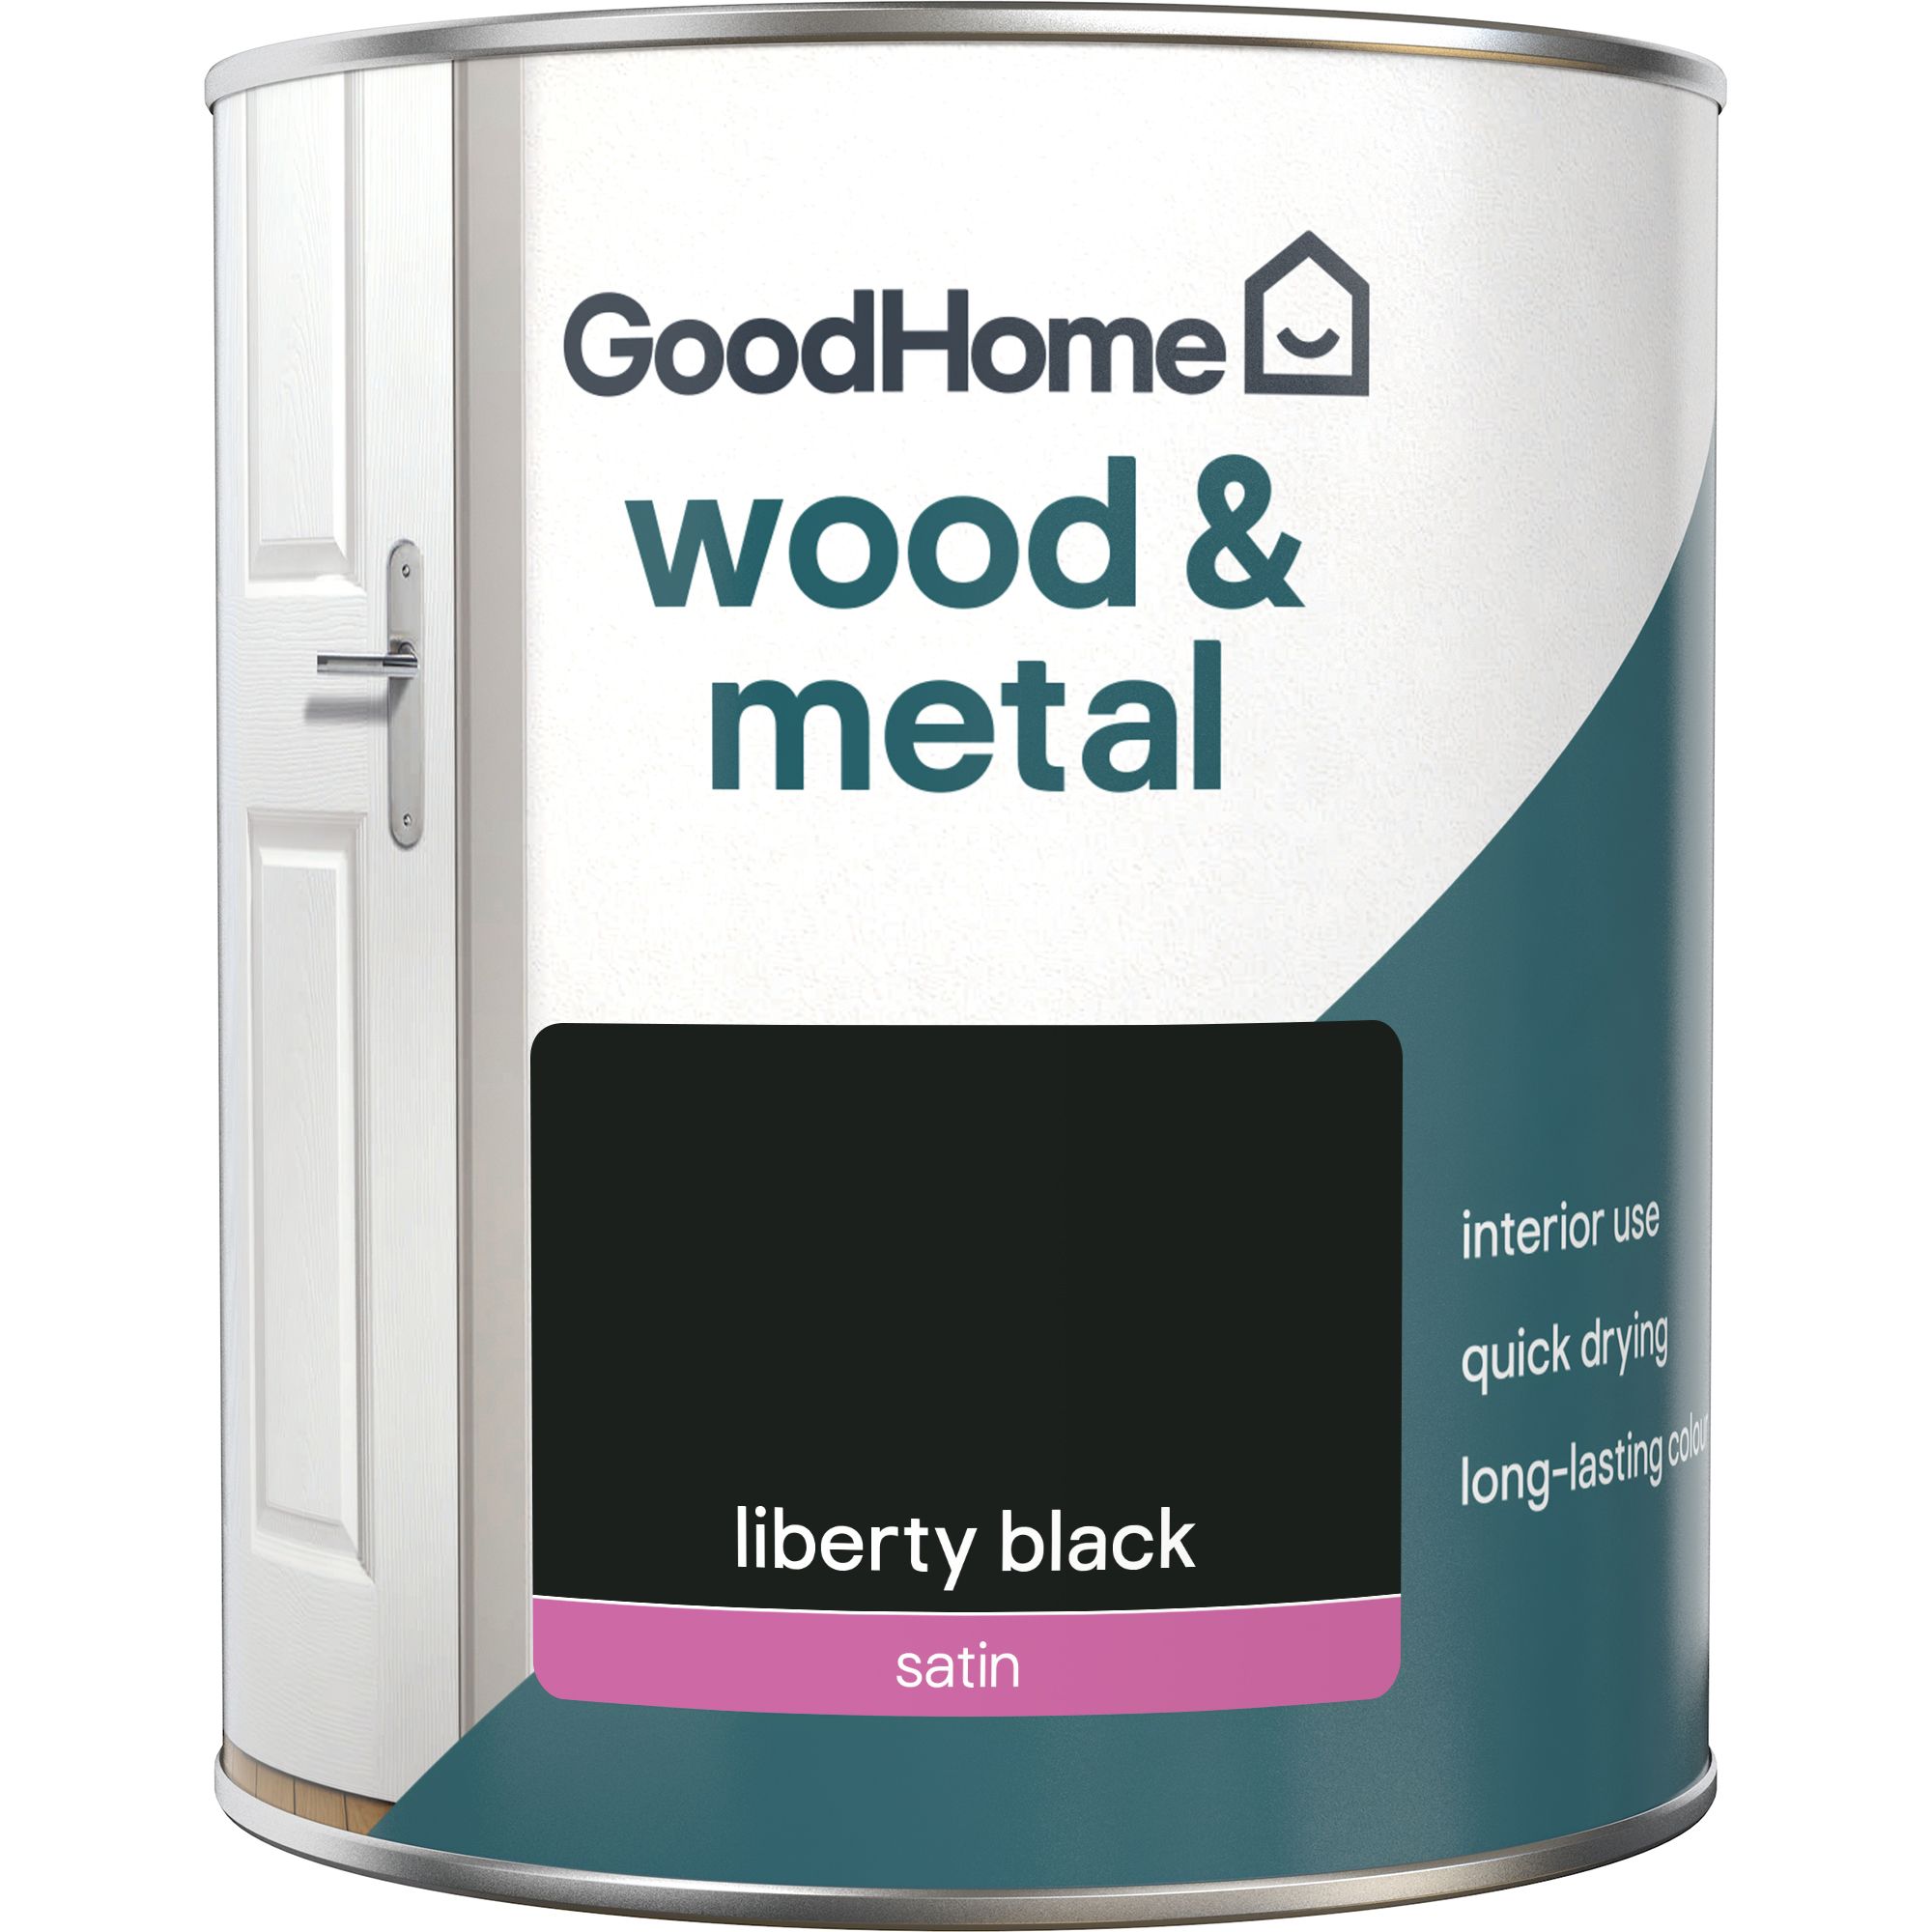 GoodHome Liberty black Satin Metal & wood paint, 750ml